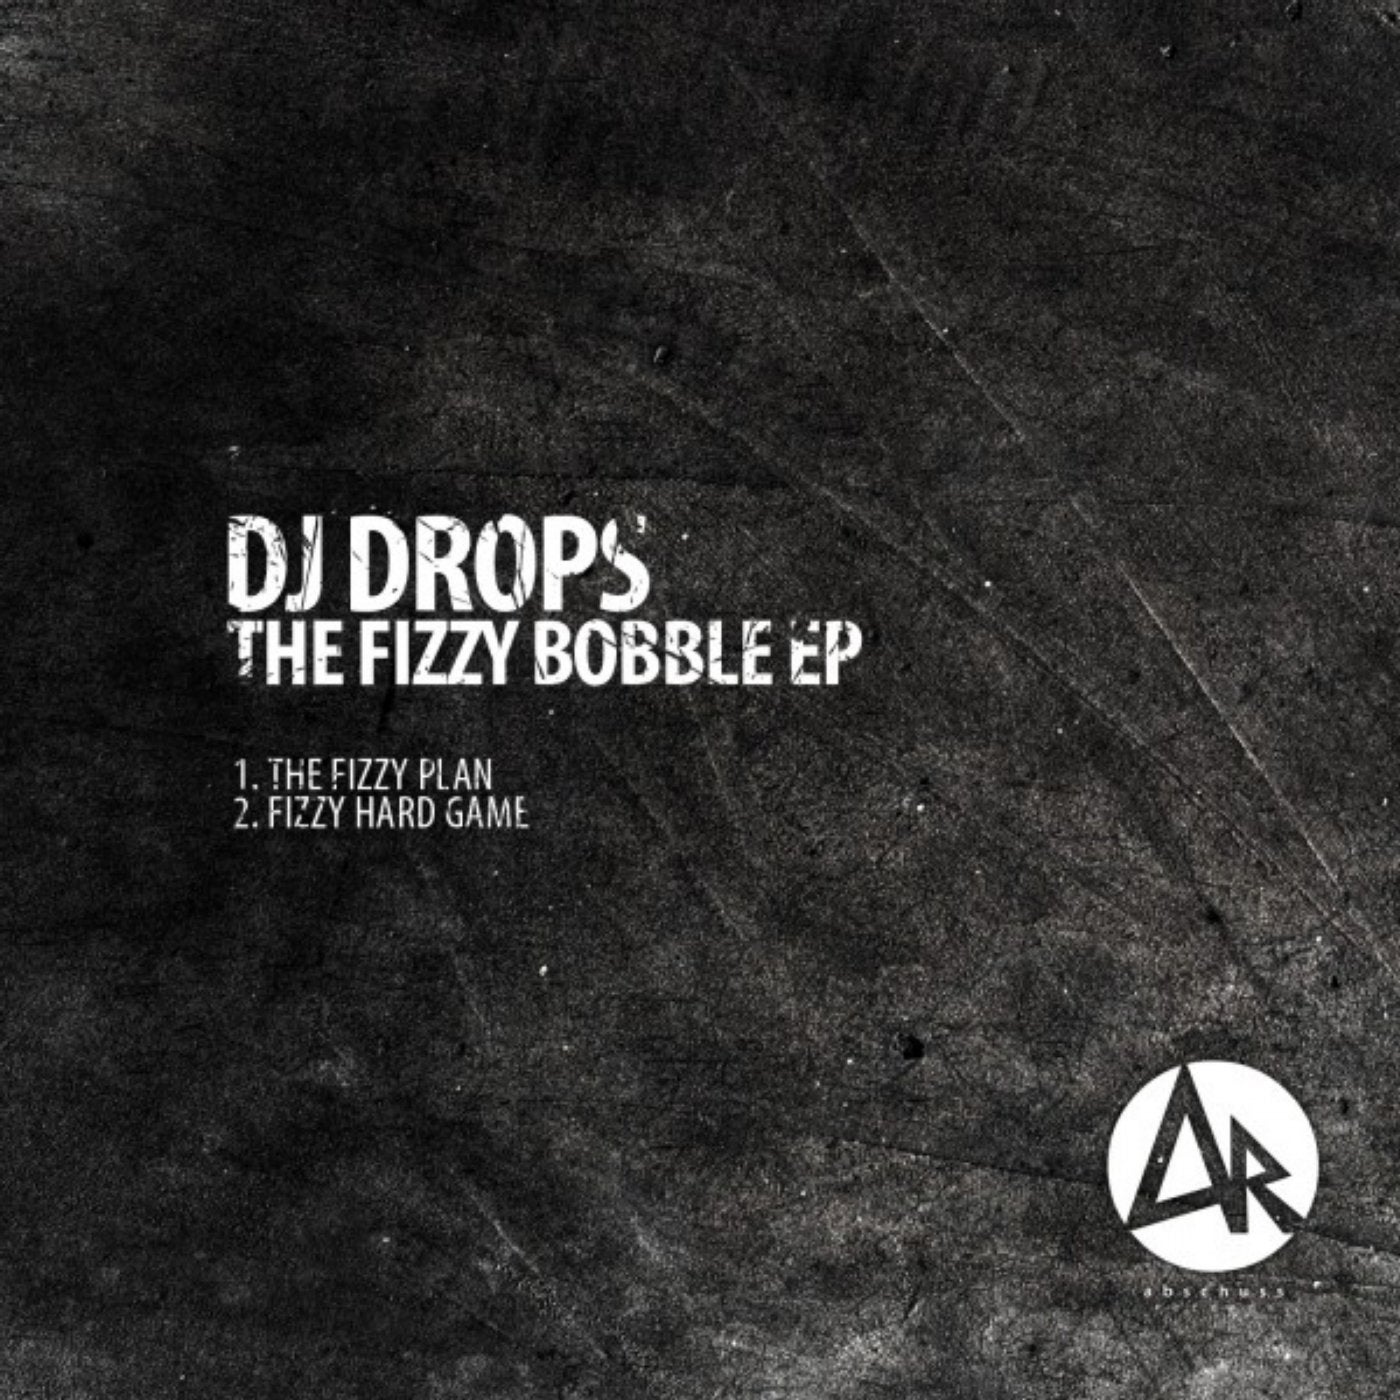 The Fizzy Bobble EP